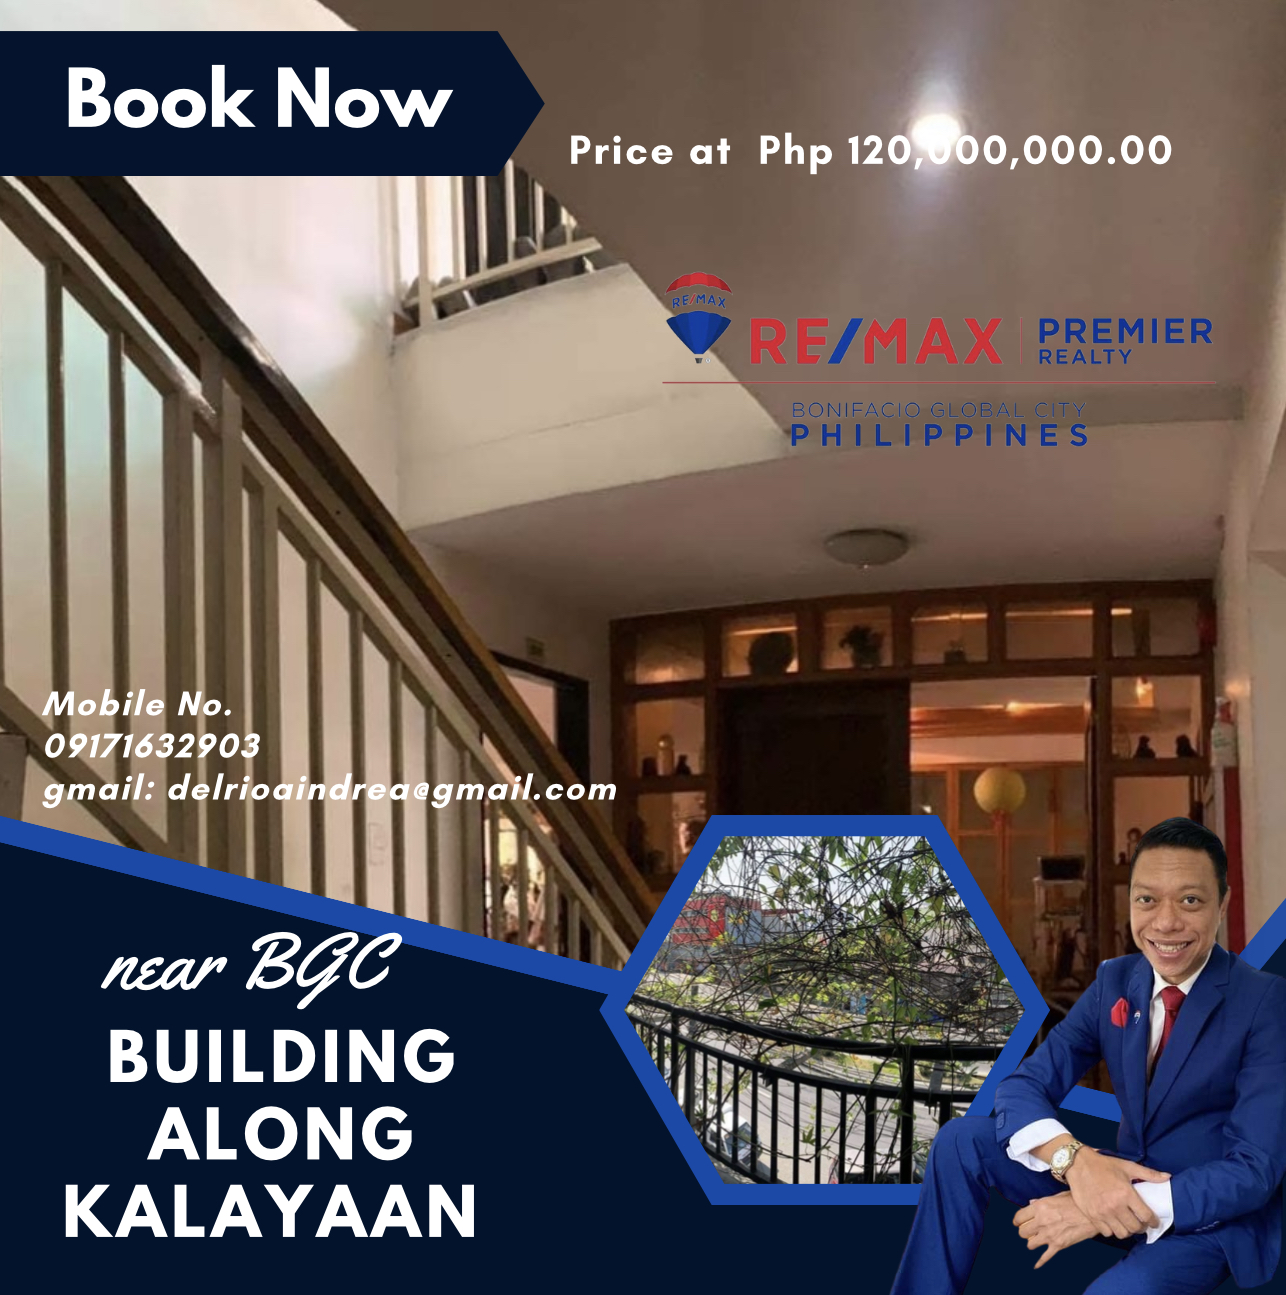 Building along Kalayaan near BGC for Sale‼️